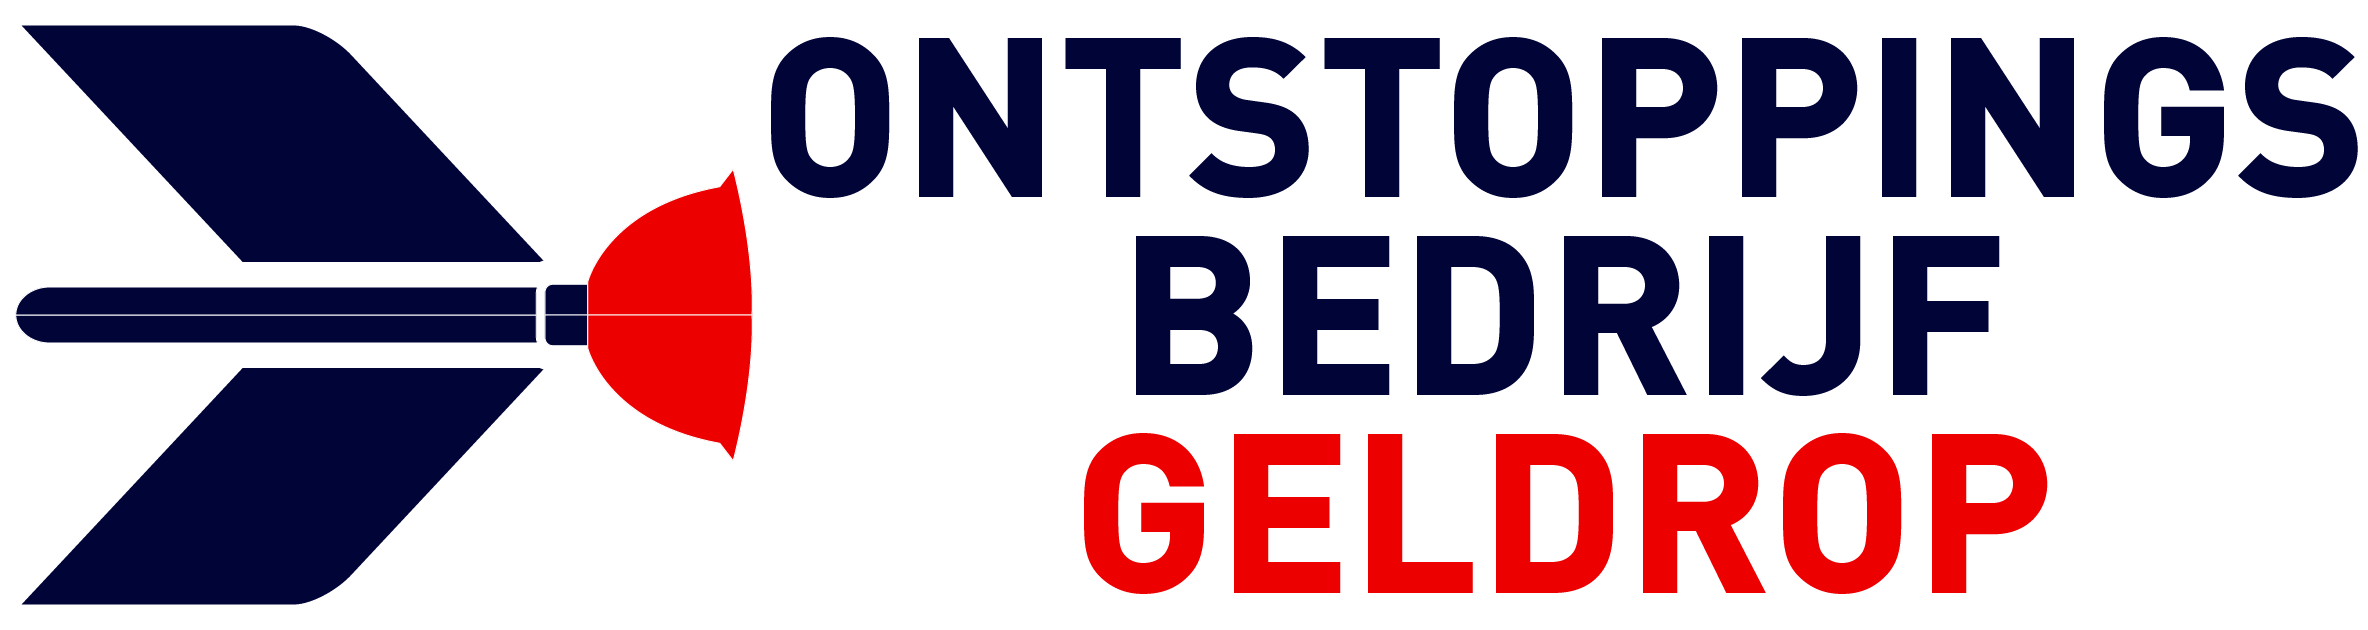 Ontstoppingsbedrijf Geldrop logo